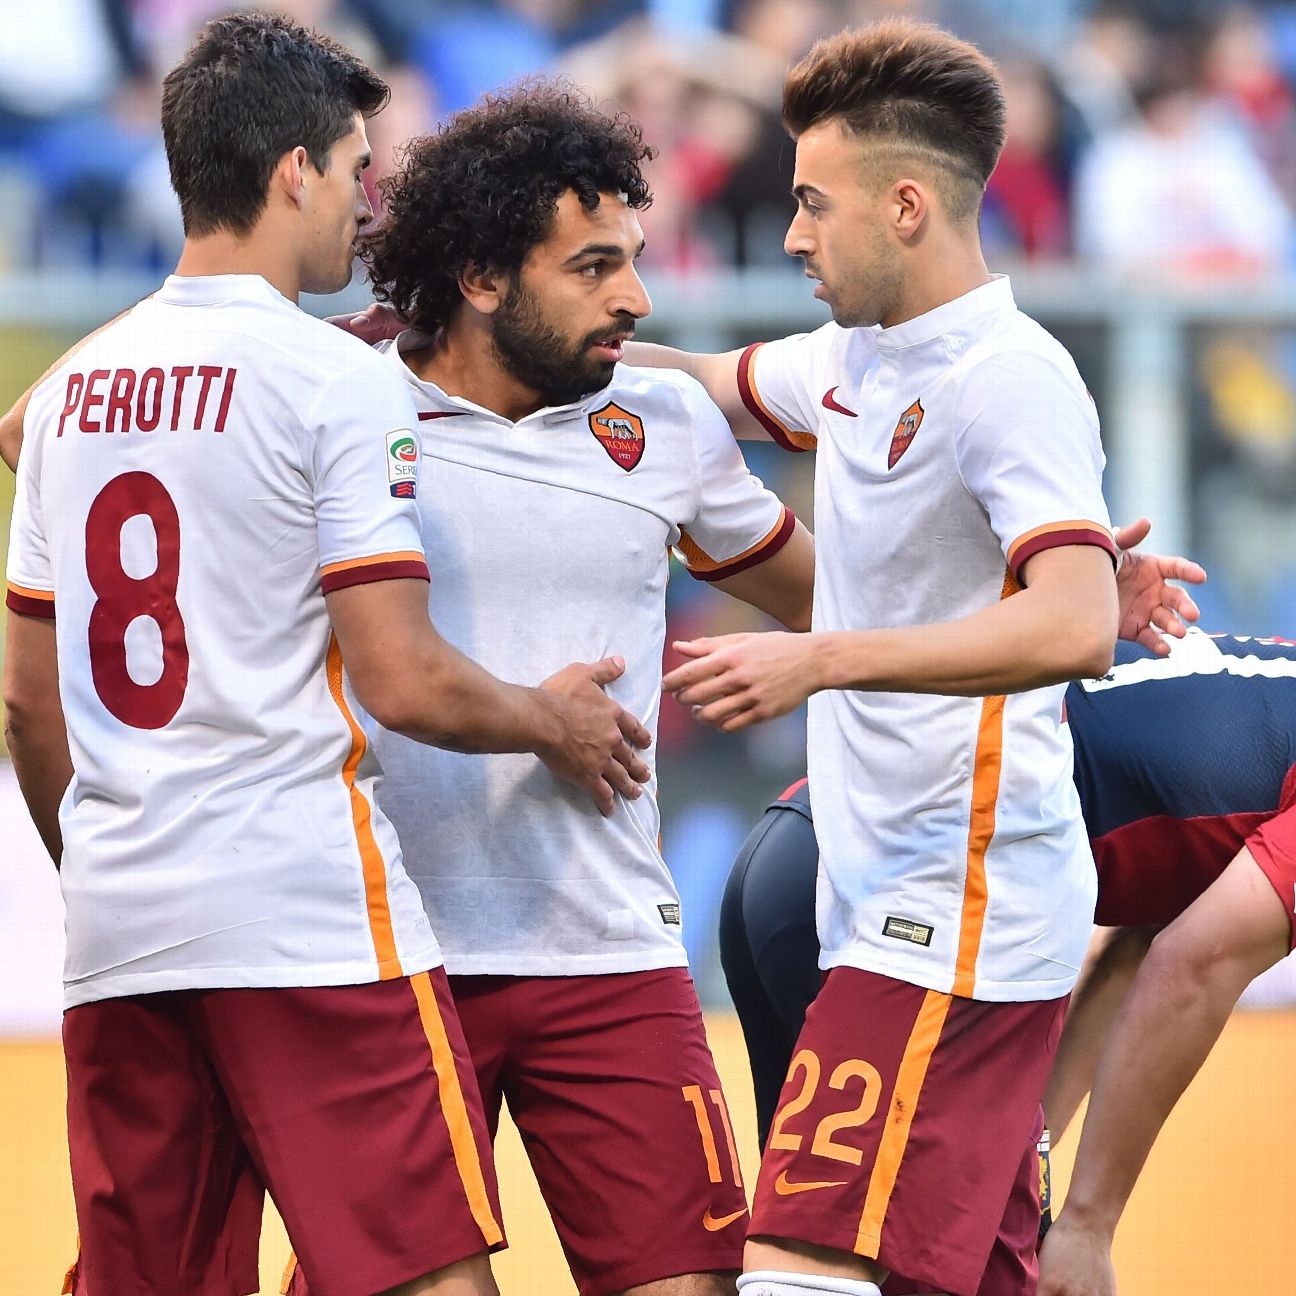 AS Roma 3-2 Genoa (May 2, 2016) Final Score - ESPN